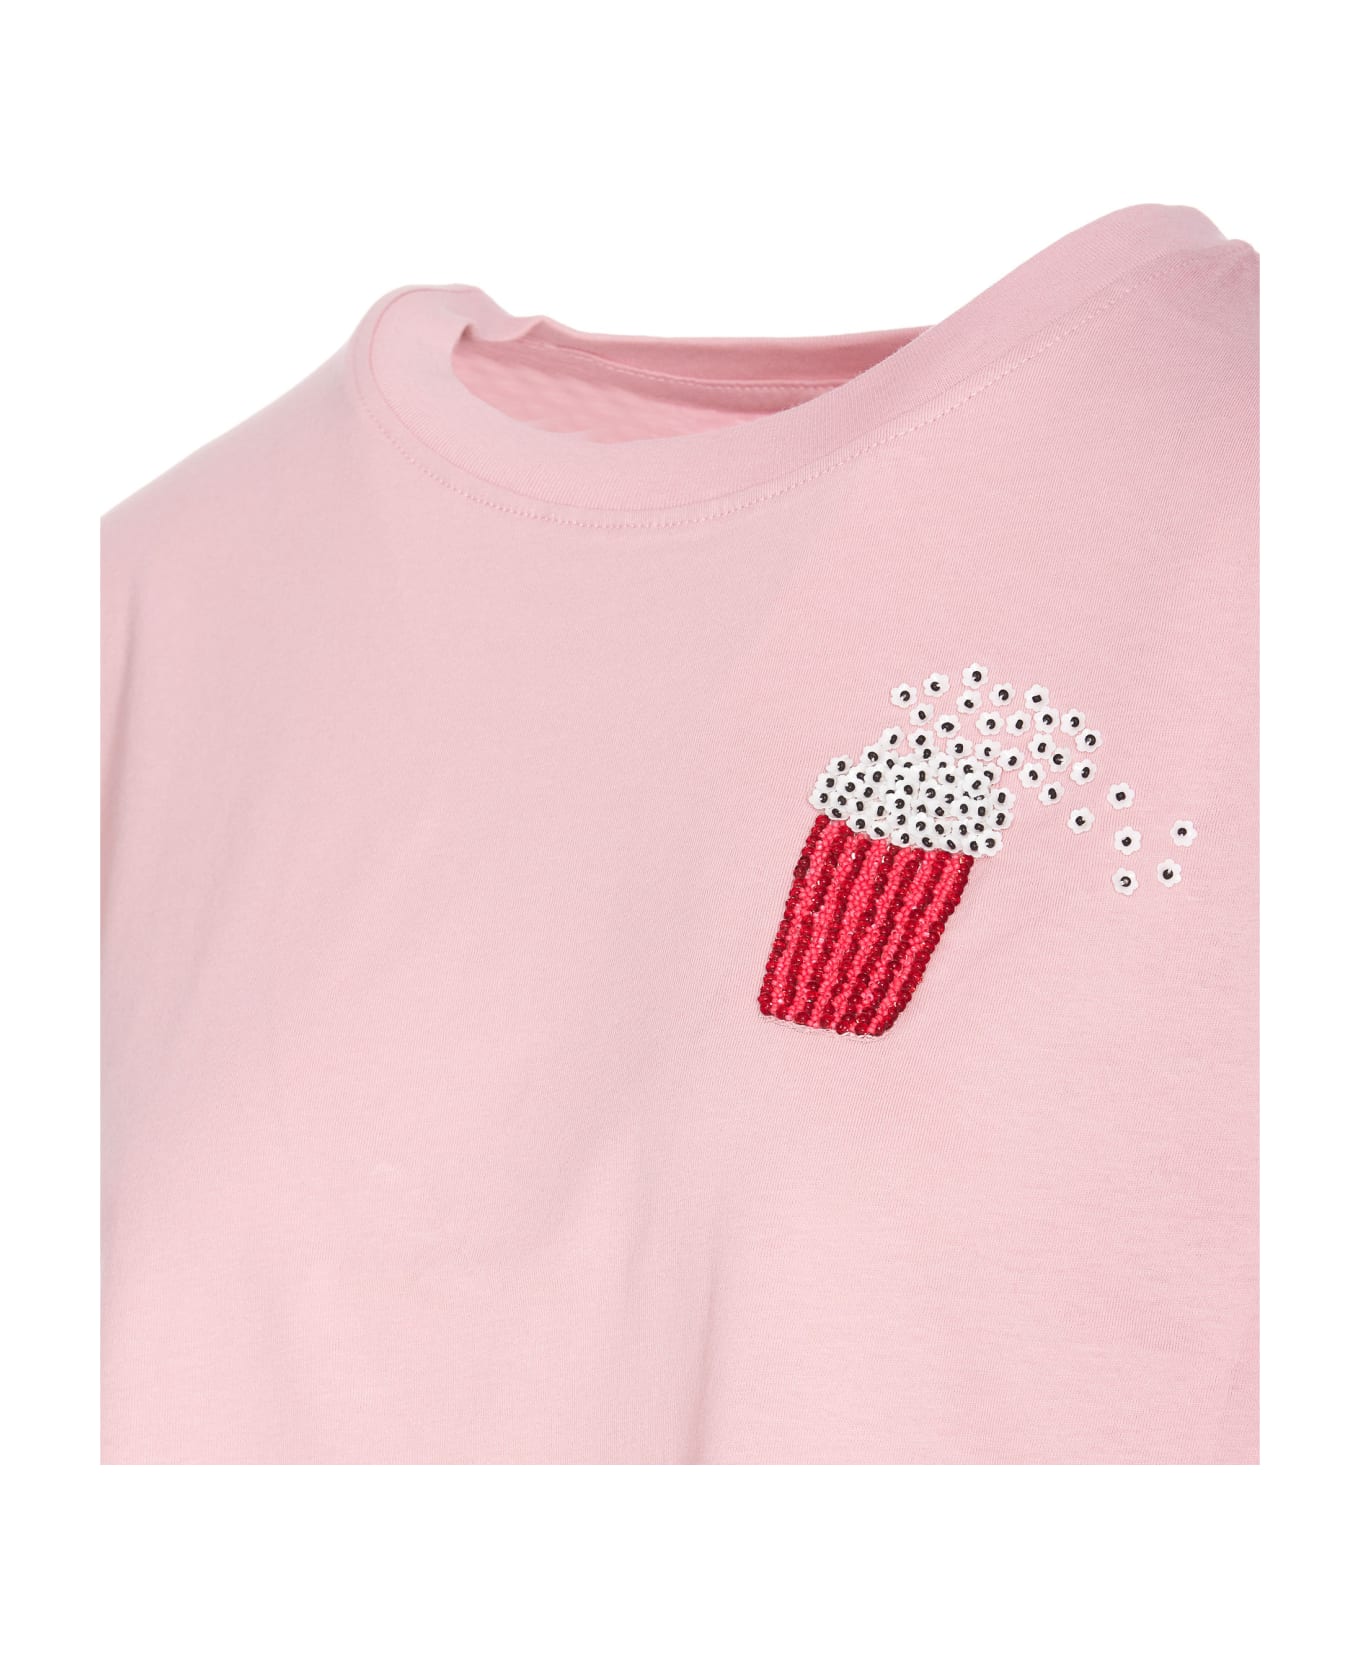 Essentiel Antwerp Faustina T-shirt - Pink Tシャツ